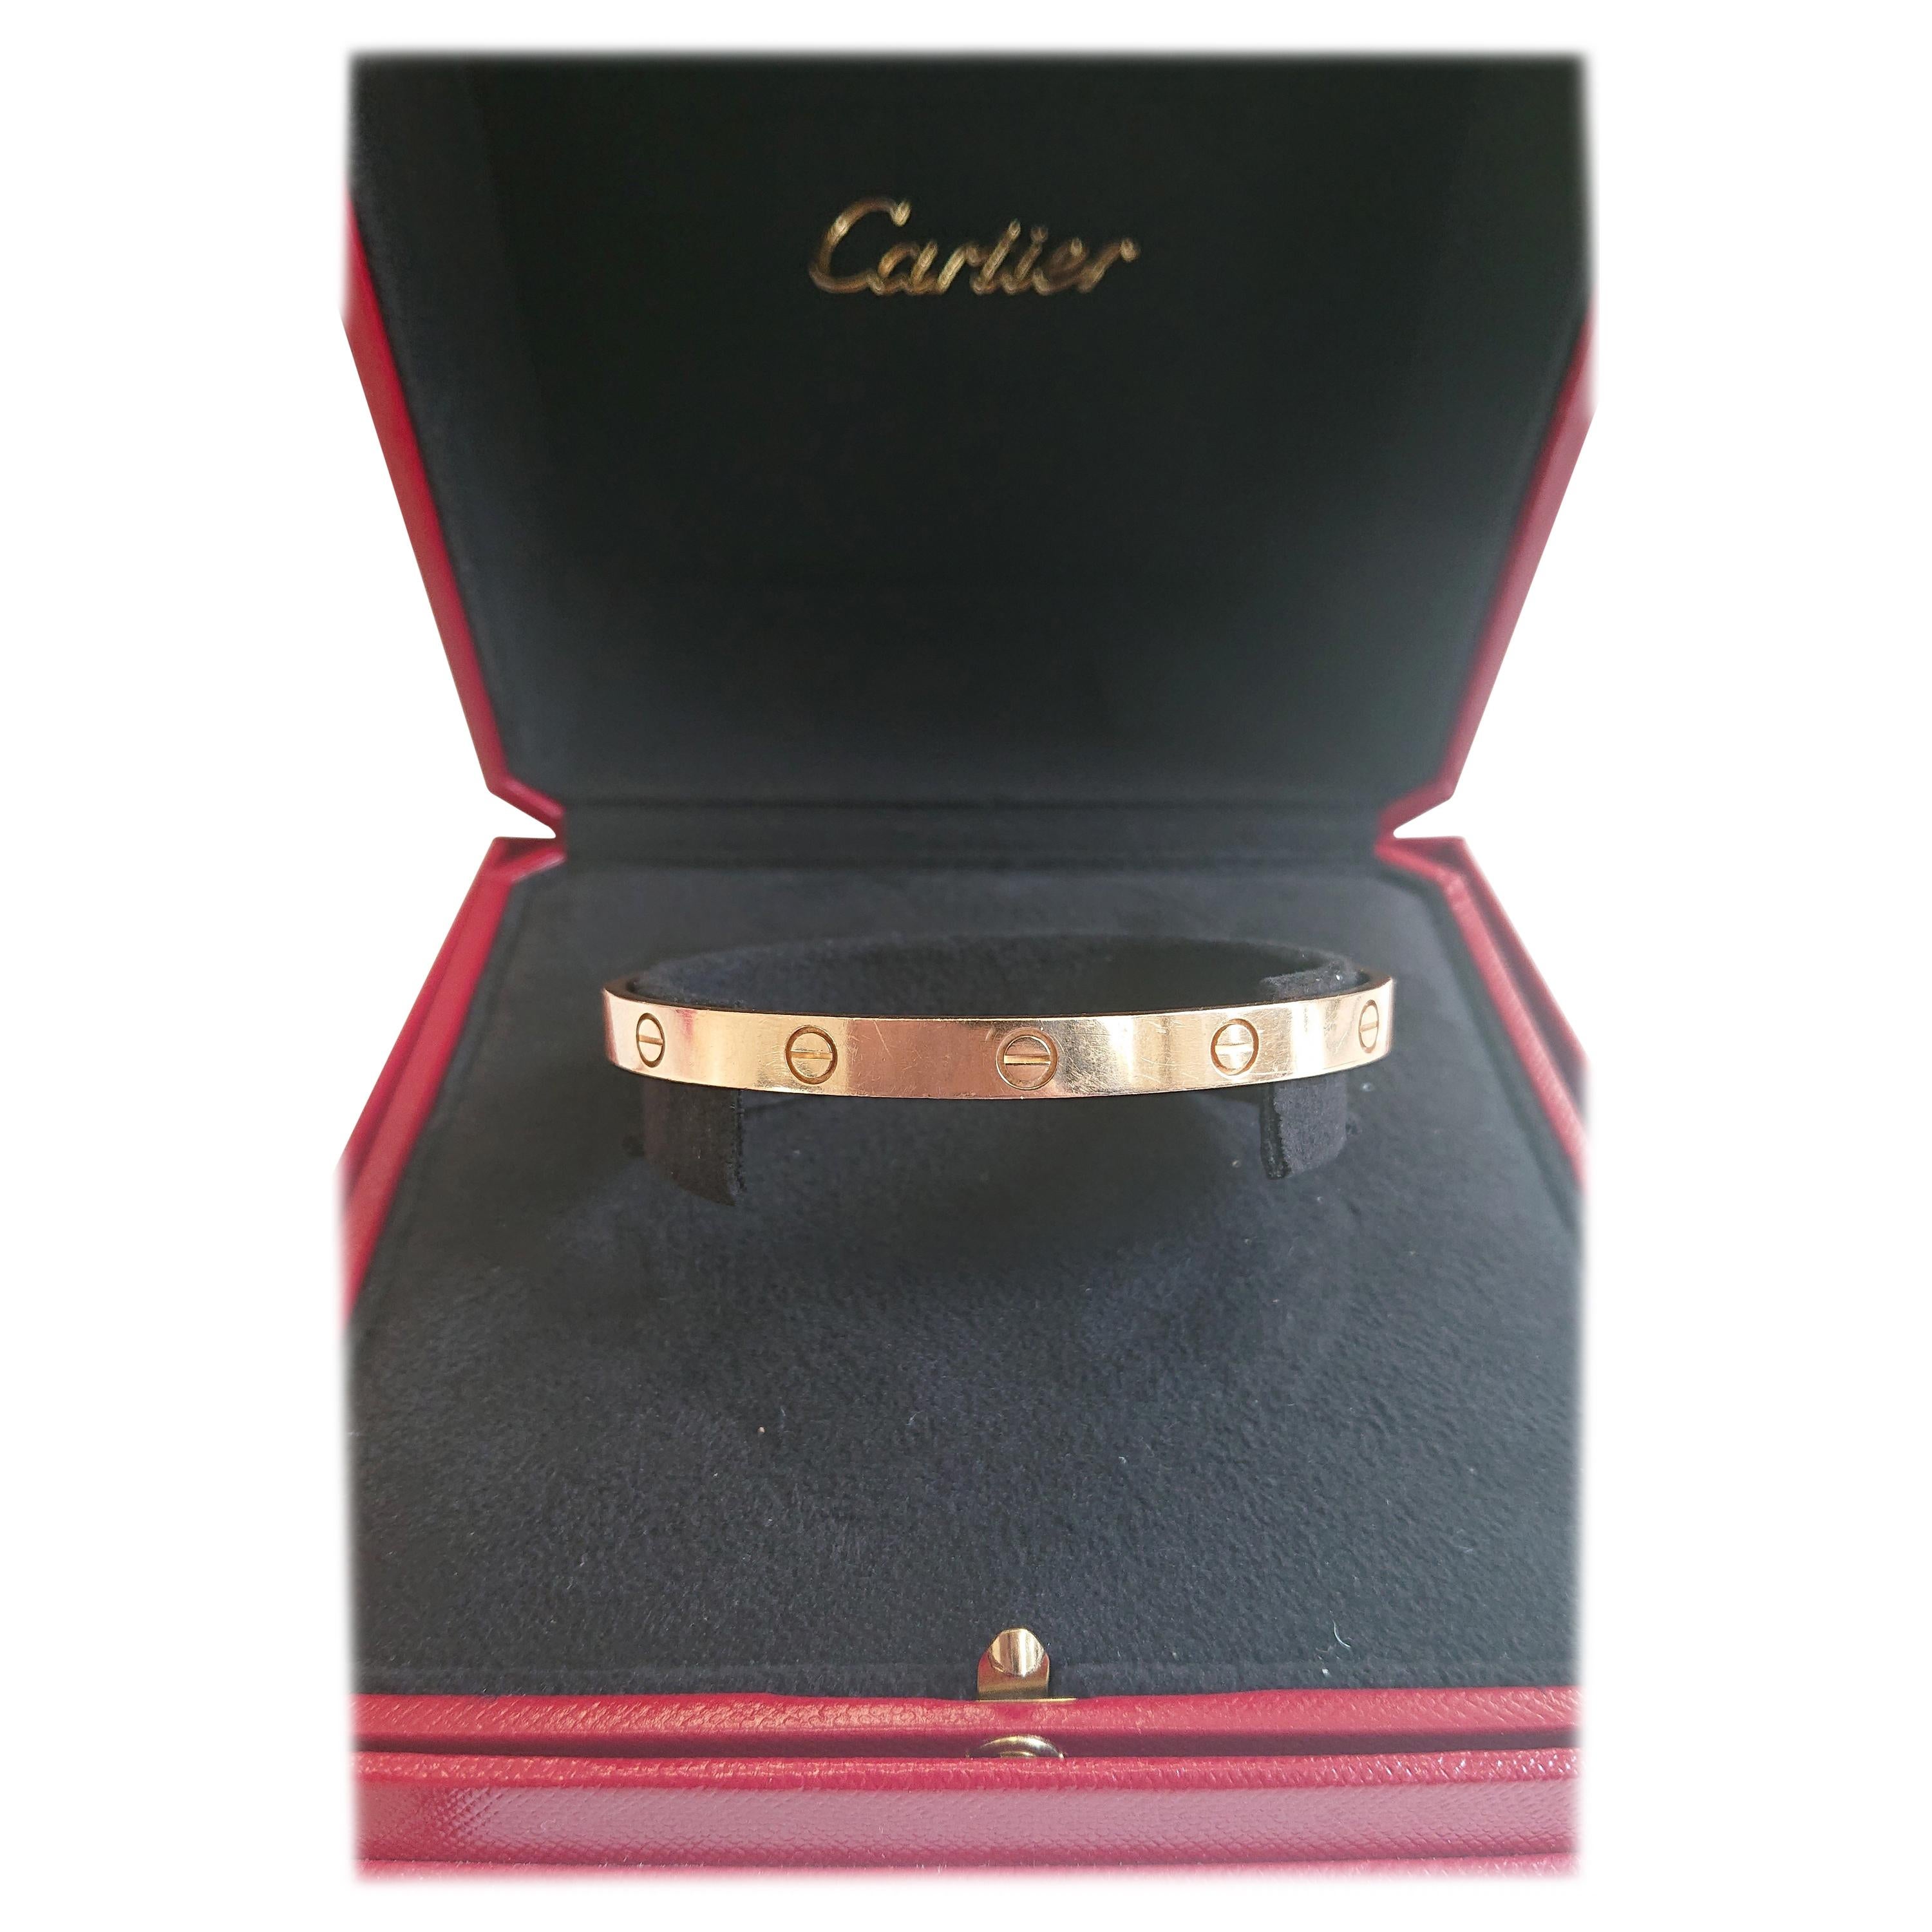 Cartier 18 Carat Yellow Gold Love Cuff Bangle Bracelet